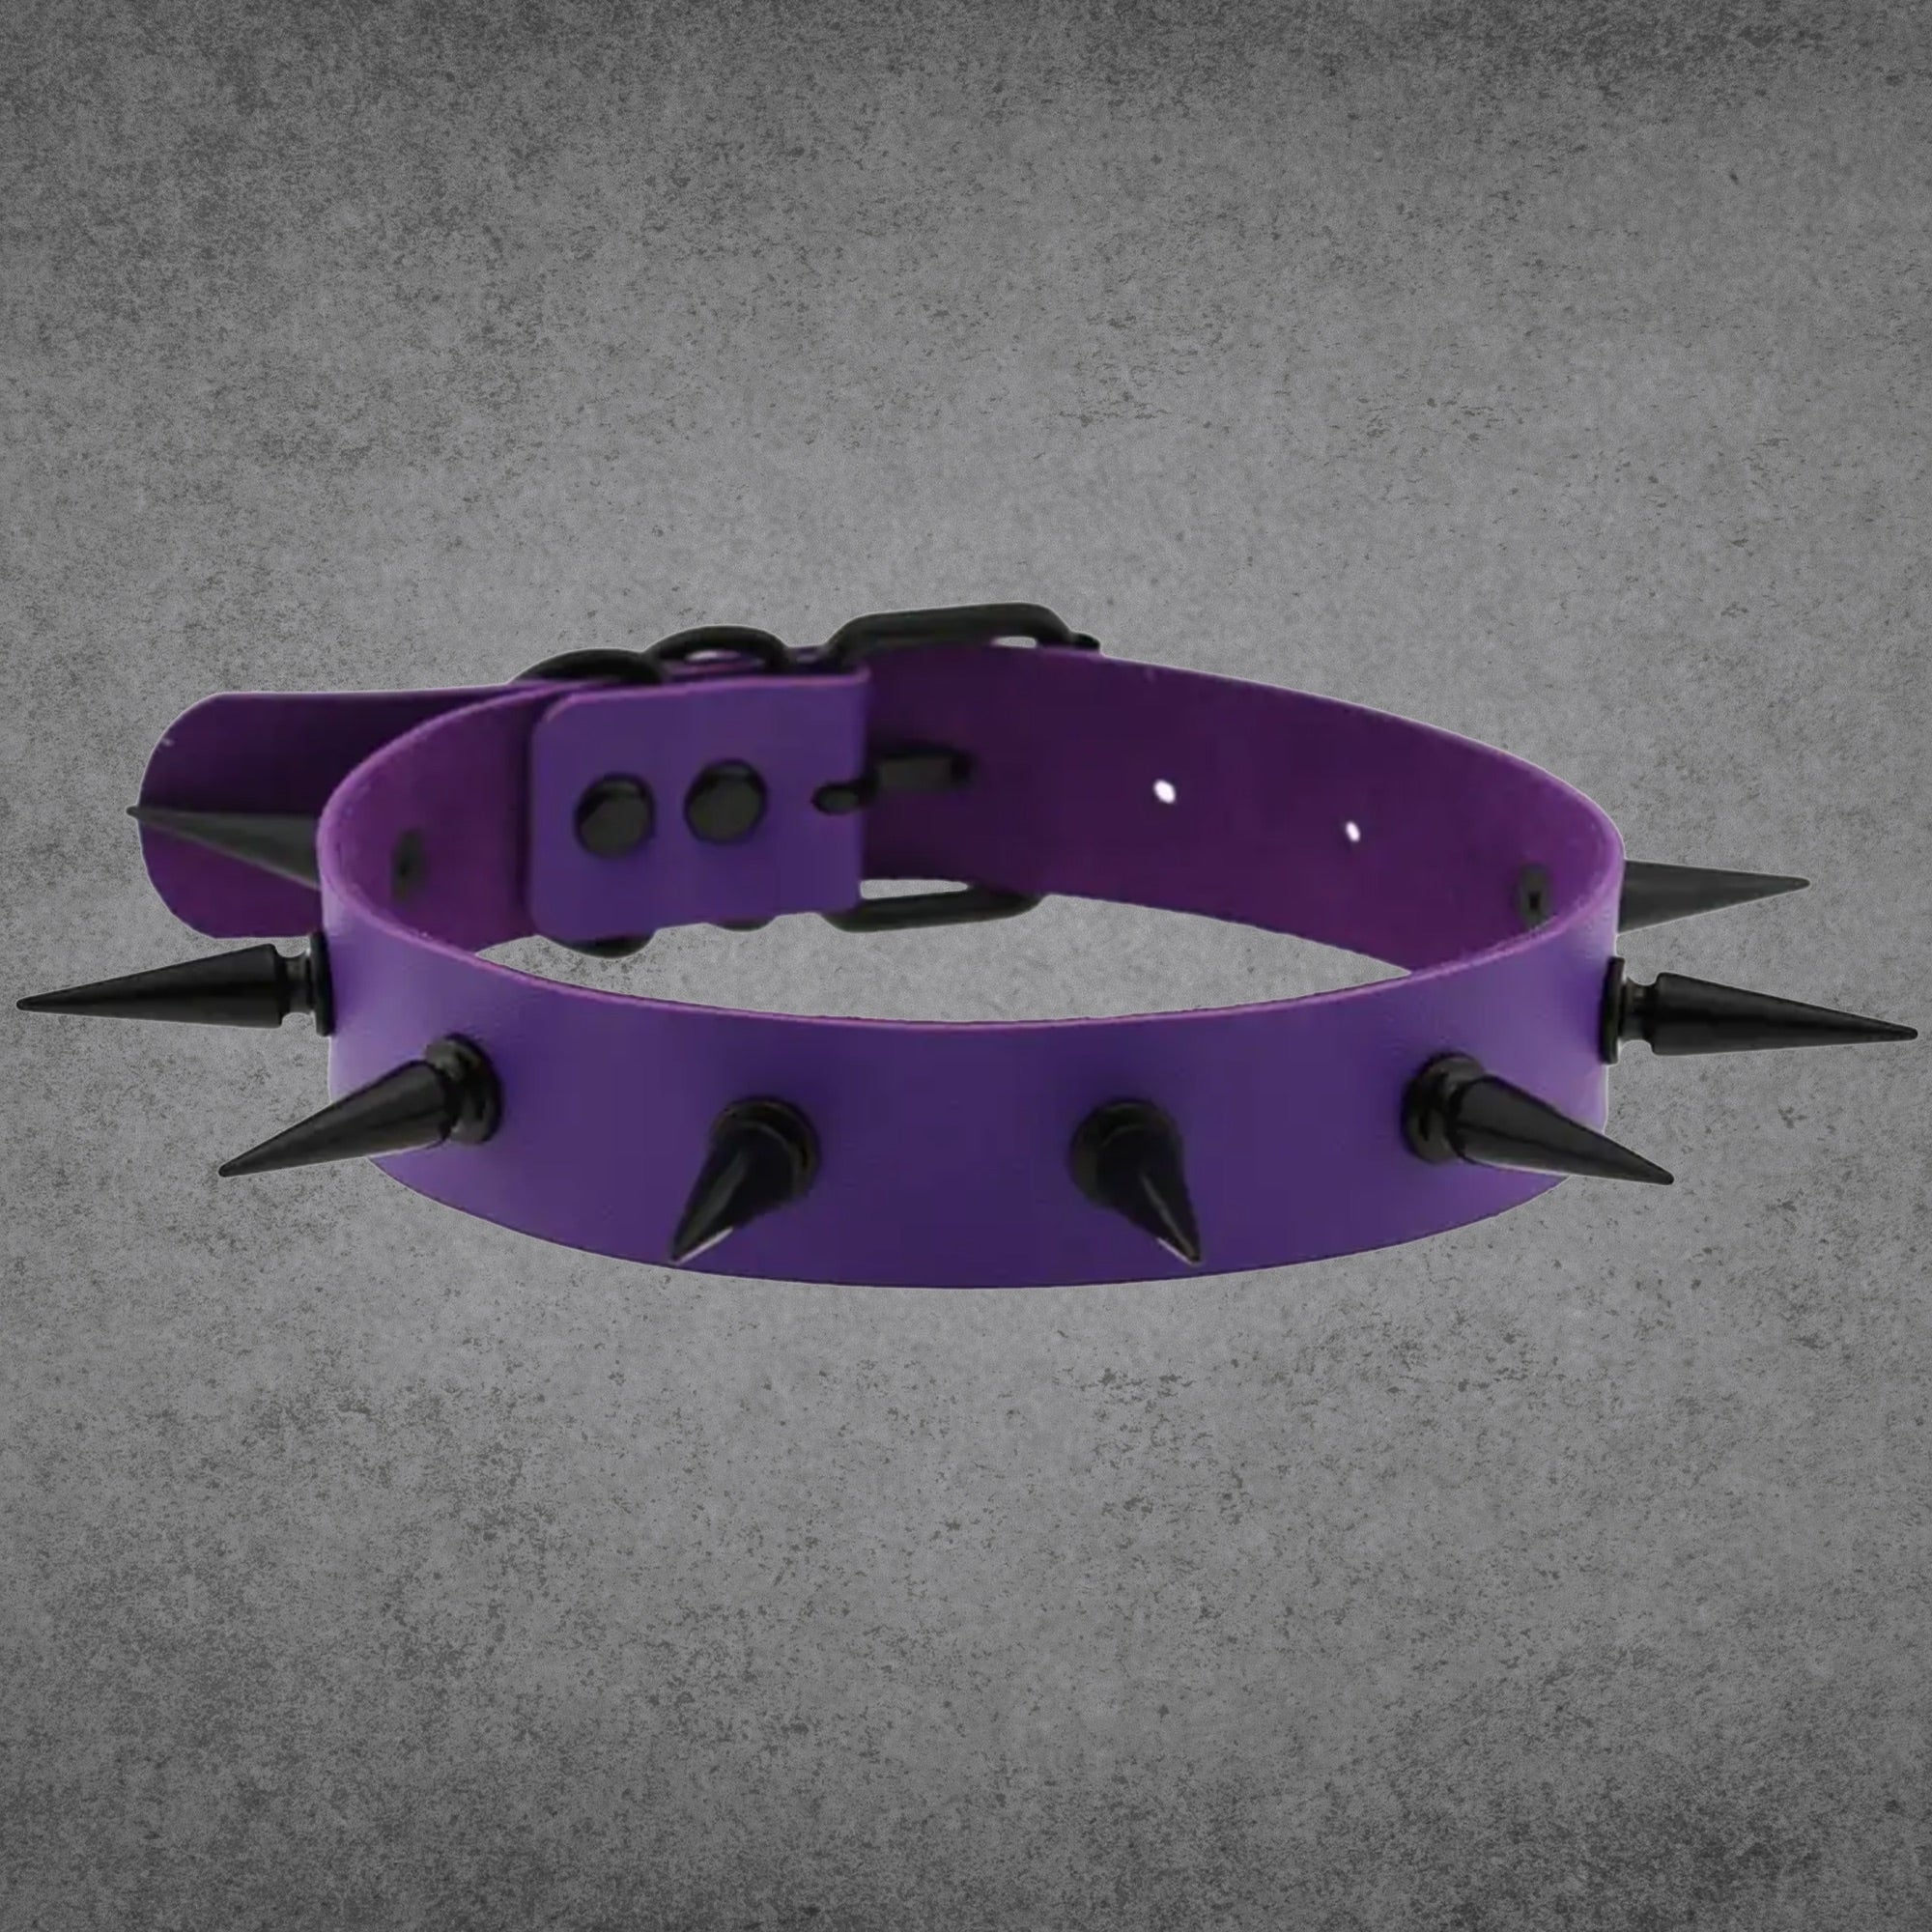 2 Inch Spike Collar - Purple & Black